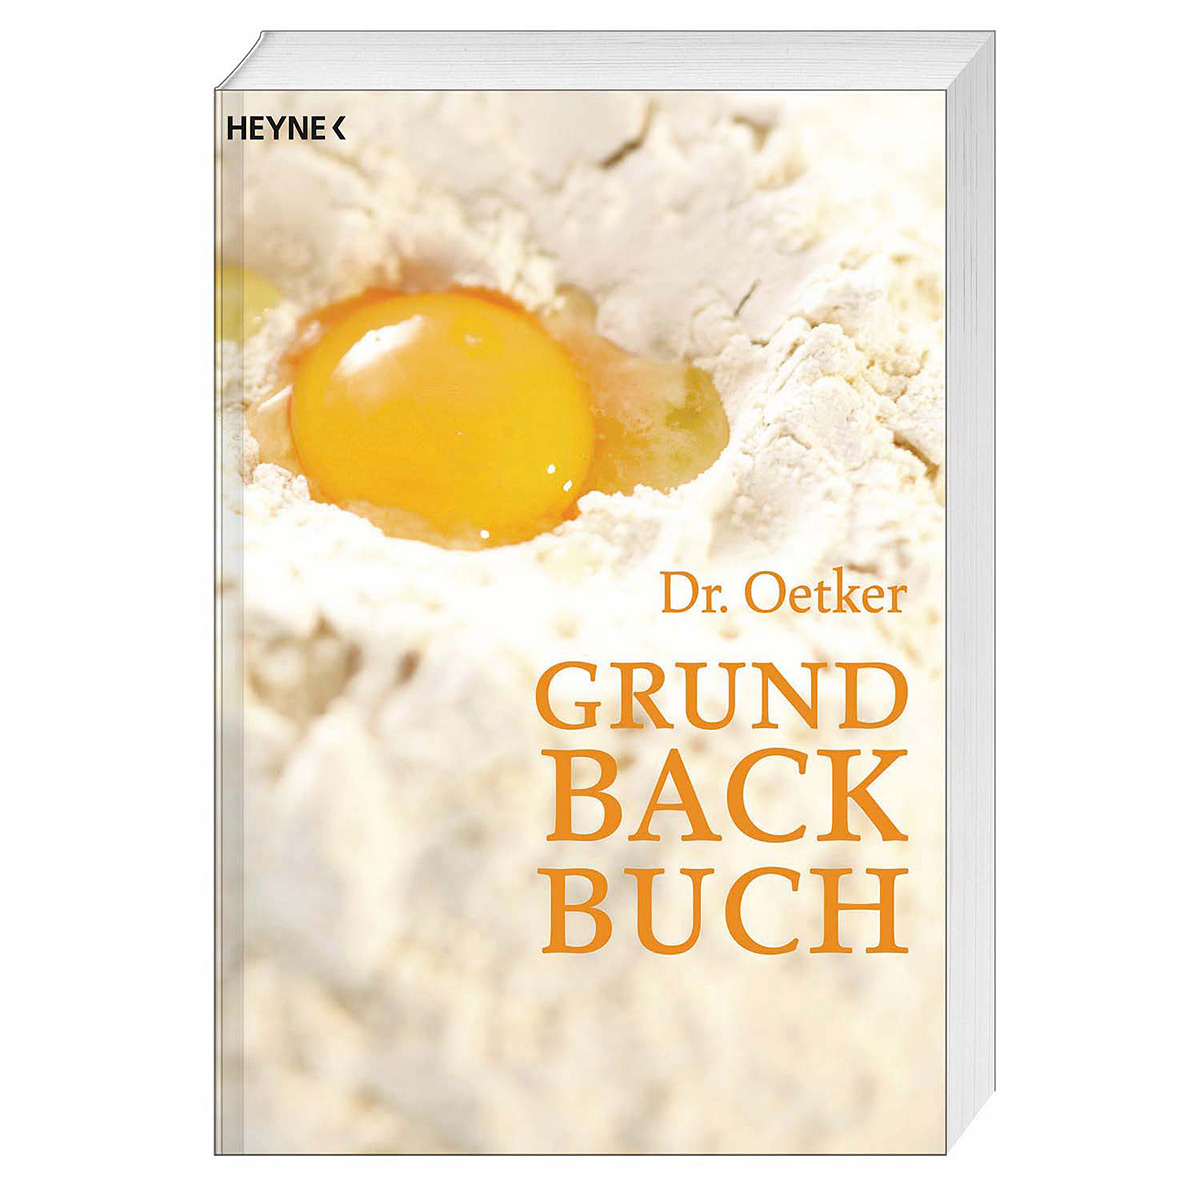 Dr Oetker »Grundbackbuch« von Heyne Verlag